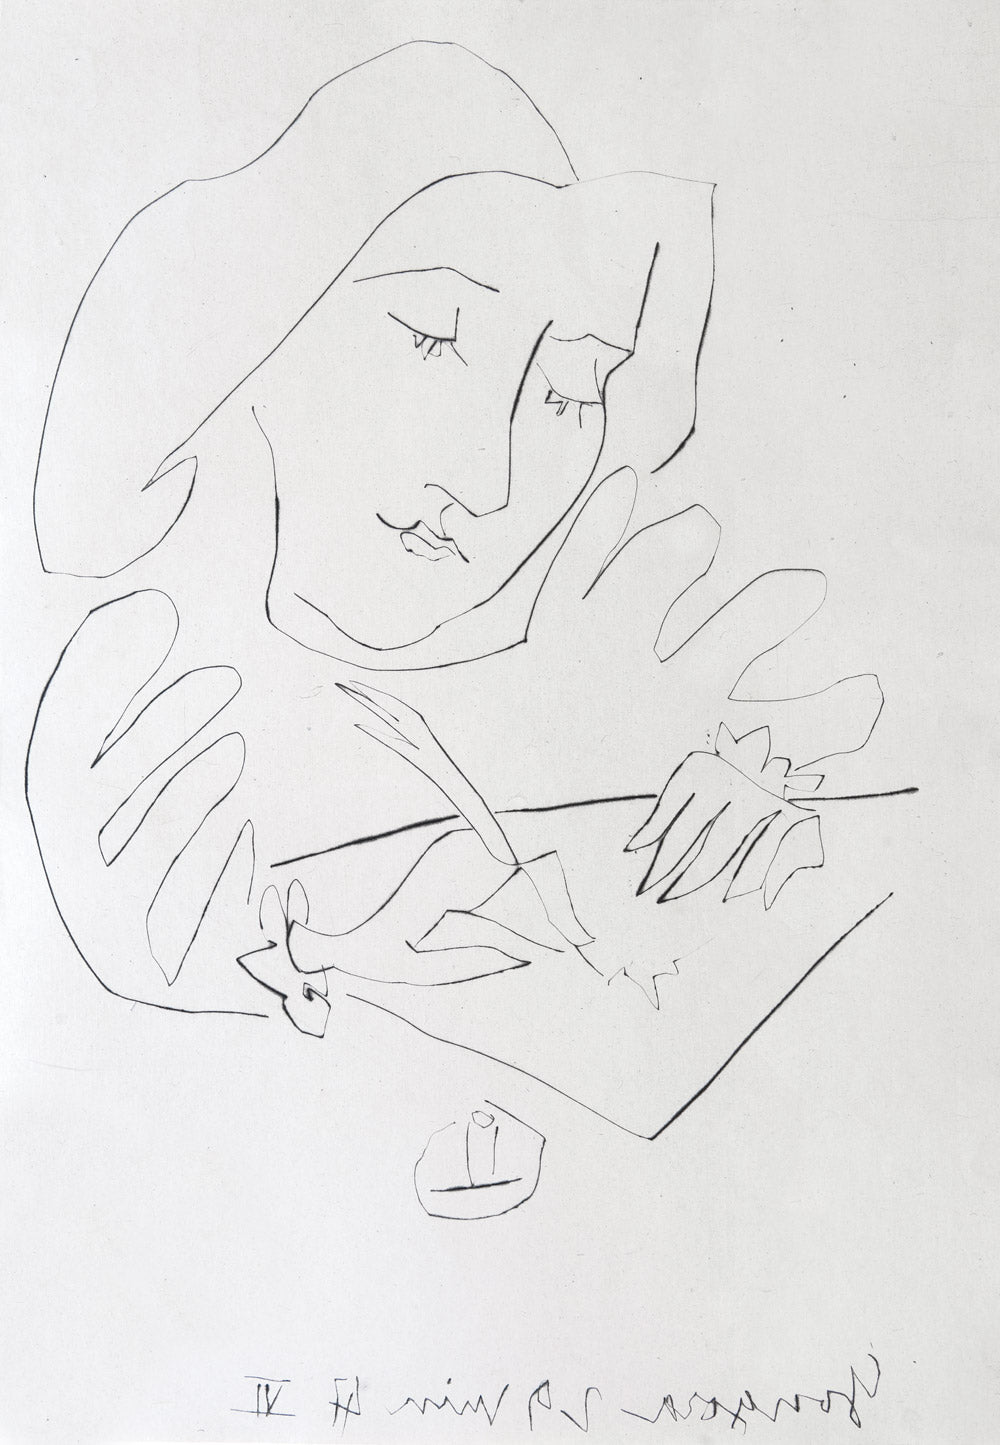 A woman writing